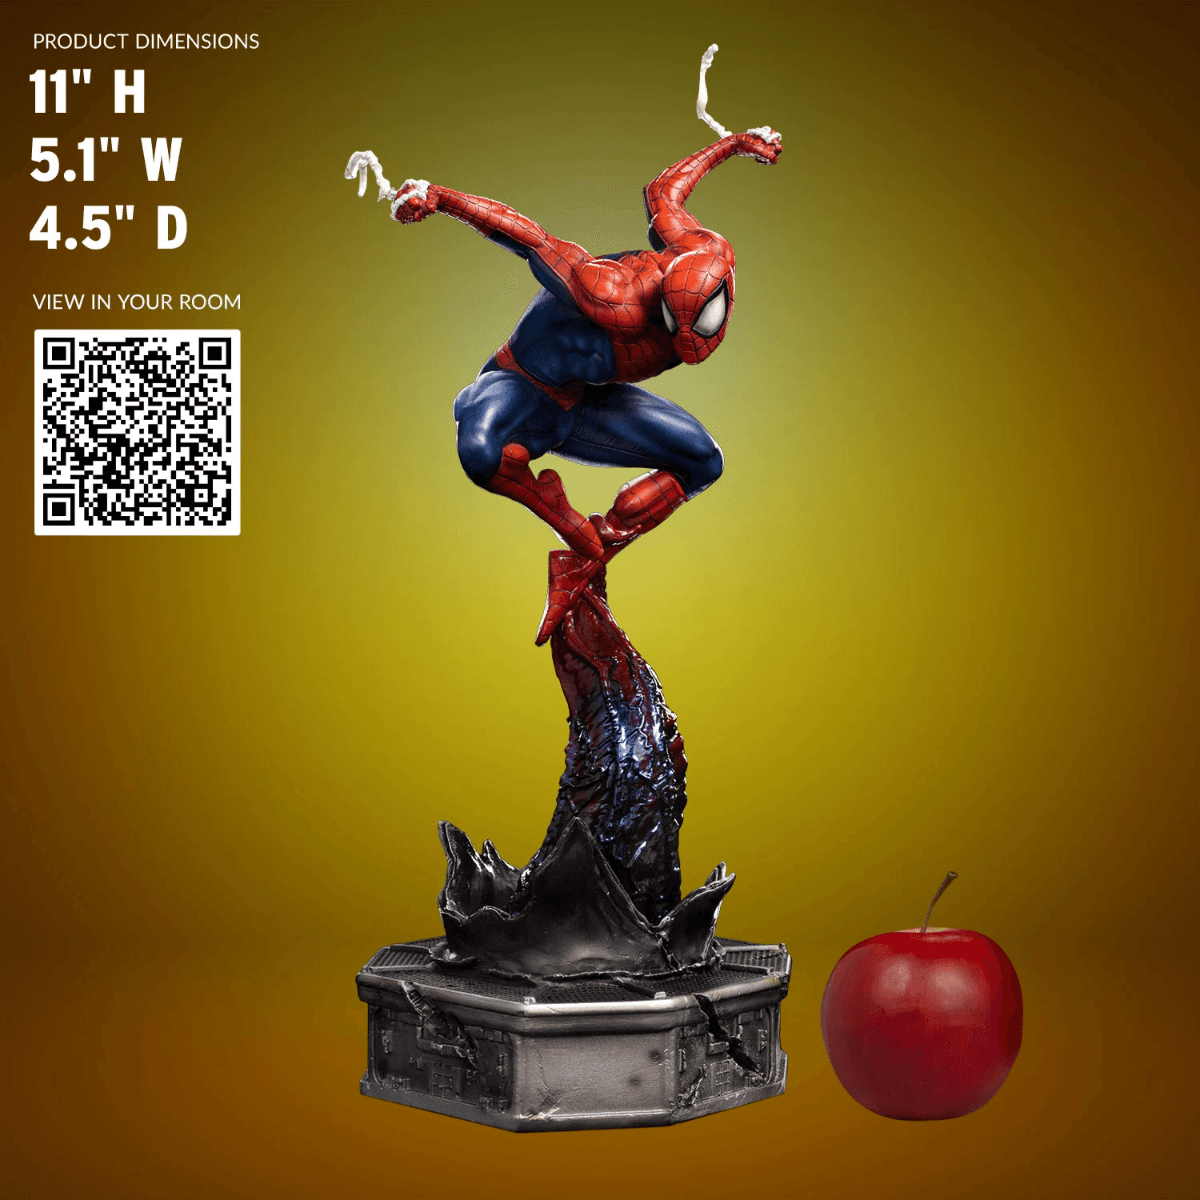 IRO53592 Spider-Man Vs Villains - Spider-Man 1:10 Scale Statue - Iron Studios - Titan Pop Culture